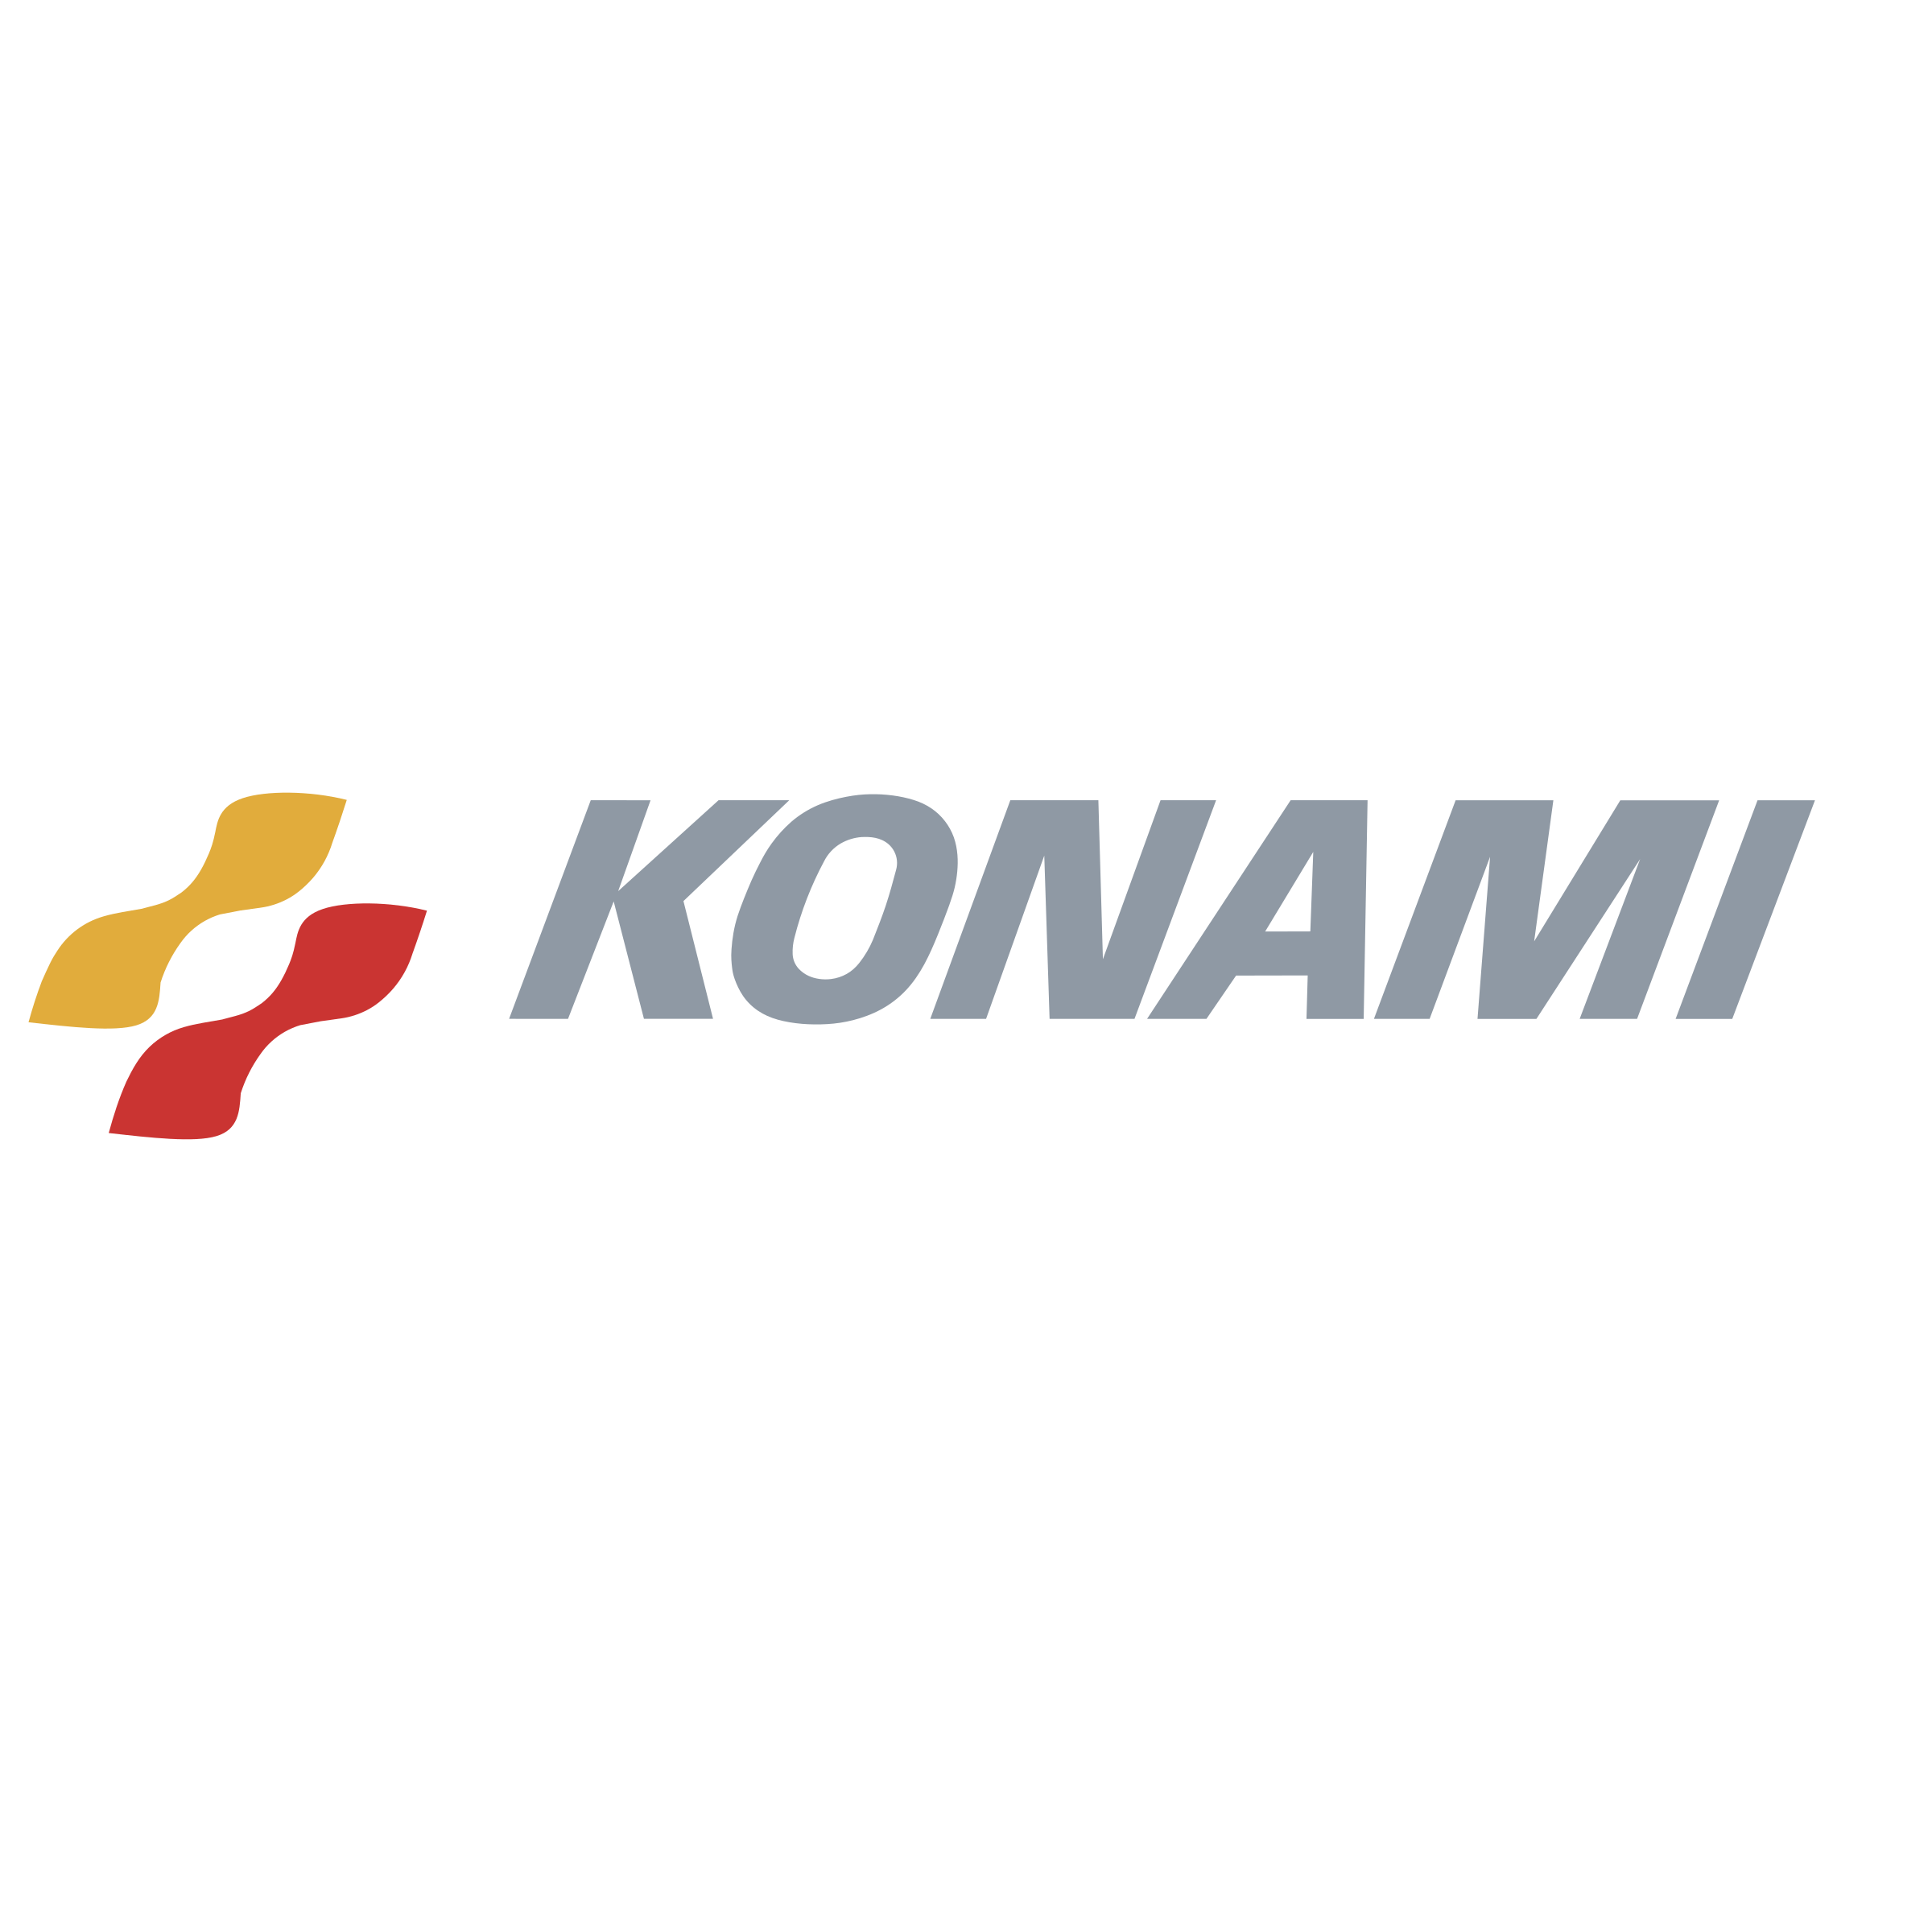 Konami Logo - Konami Logo PNG Transparent & SVG Vector